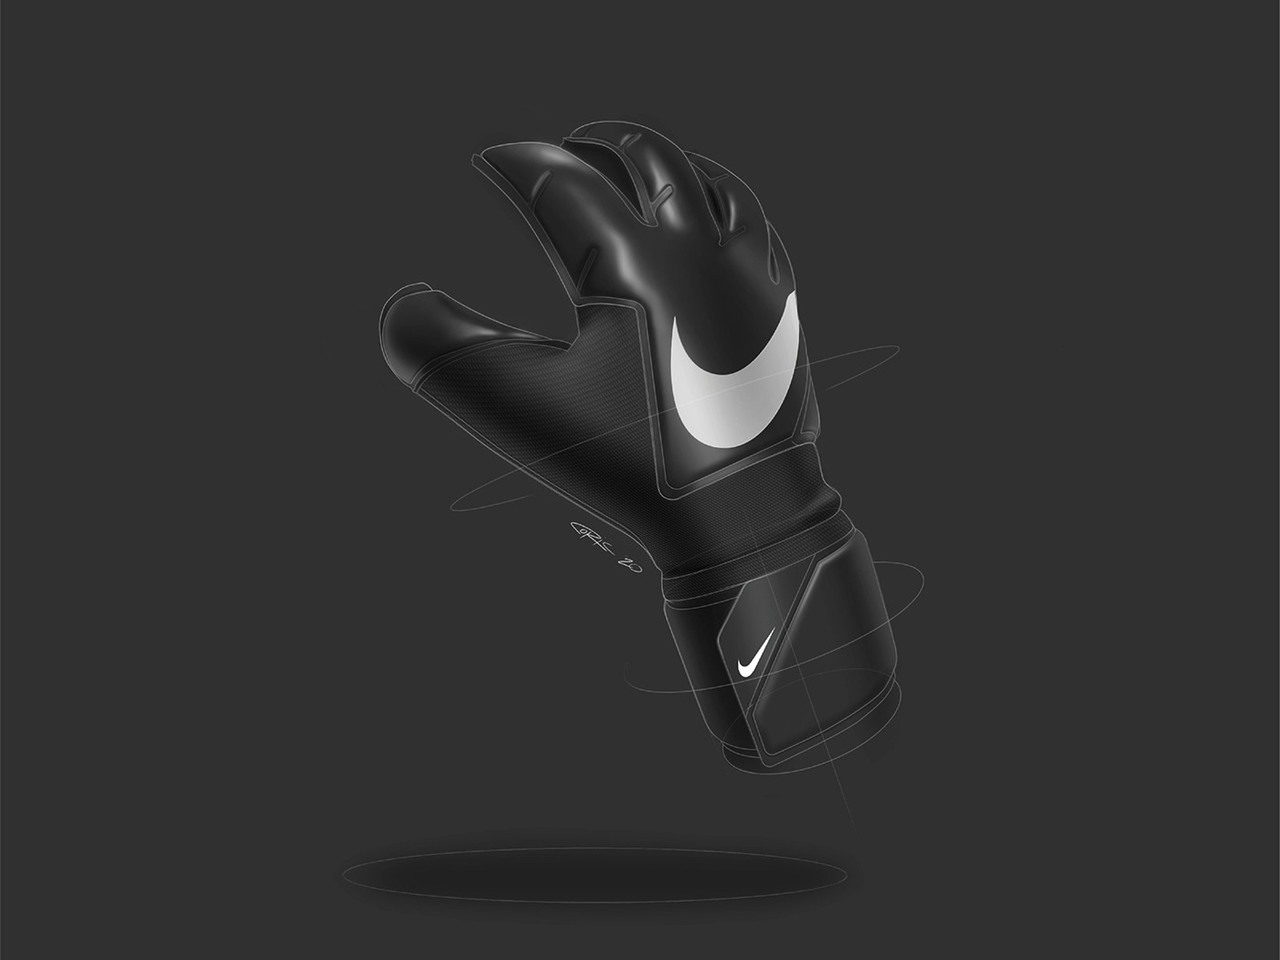 Nike GK Vapor Grip 3——具有简洁外观与更高使用性能的守门员手套- 普象网